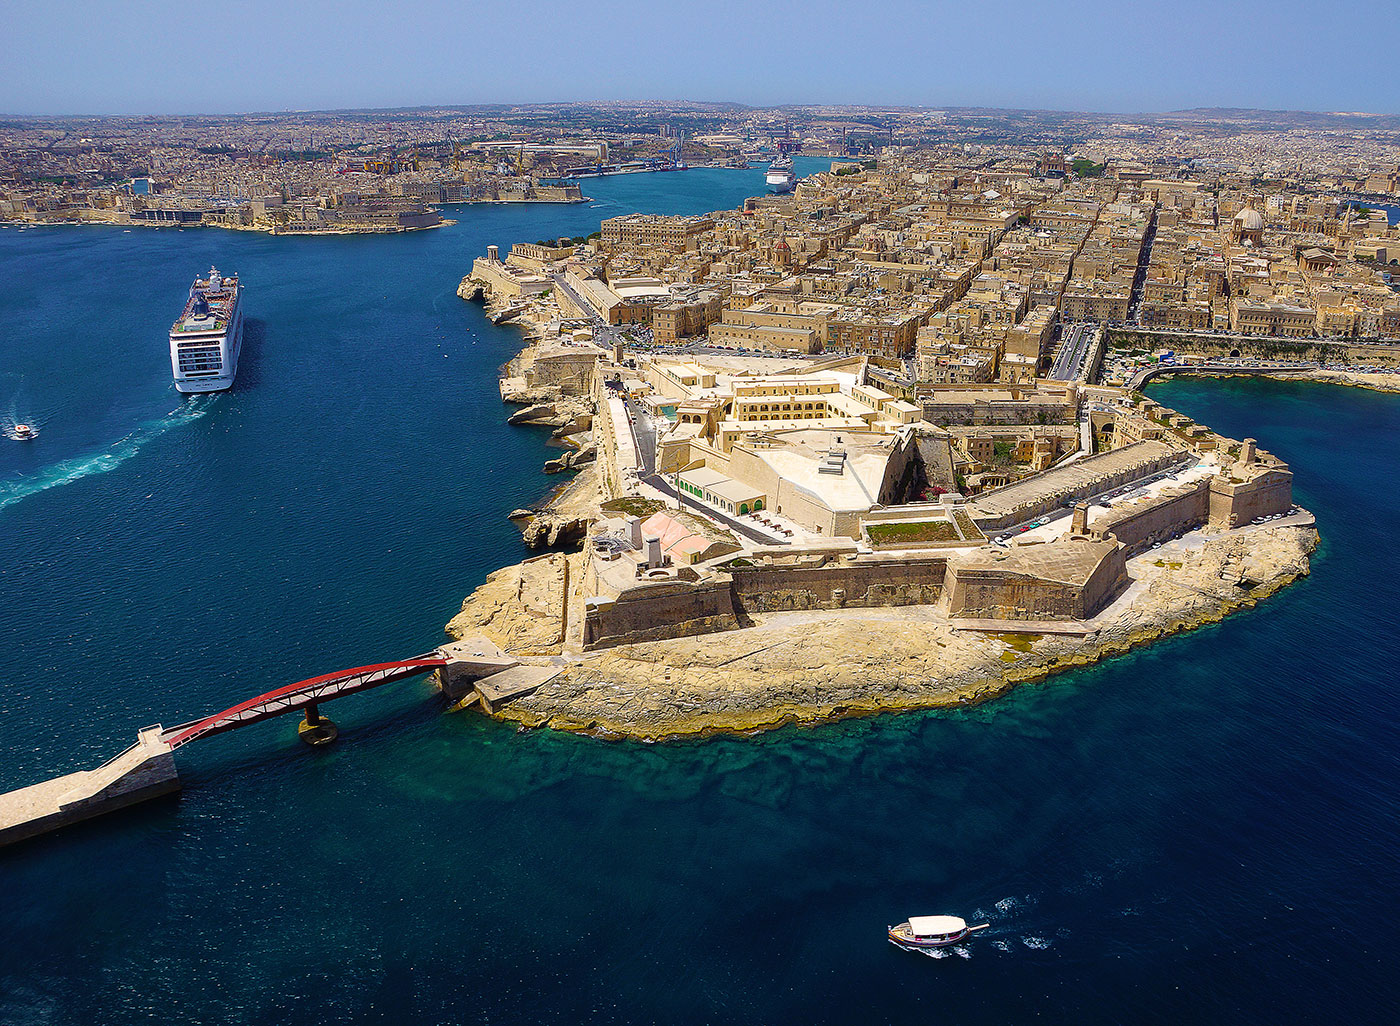 Valletta Cruise Port participates in MedCruise and Princess Cruises project